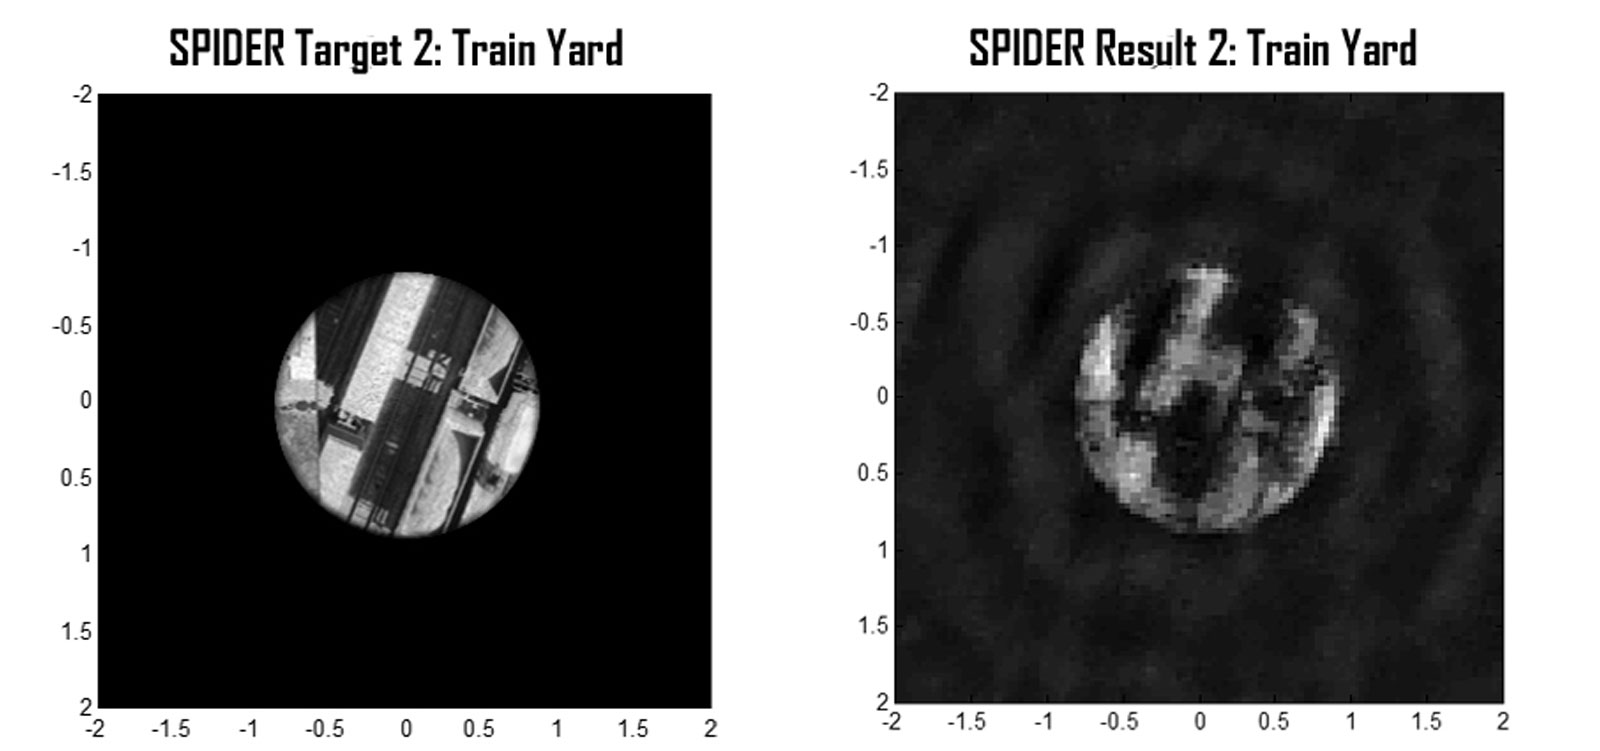 Lockheed Martin's SPIDER image samples